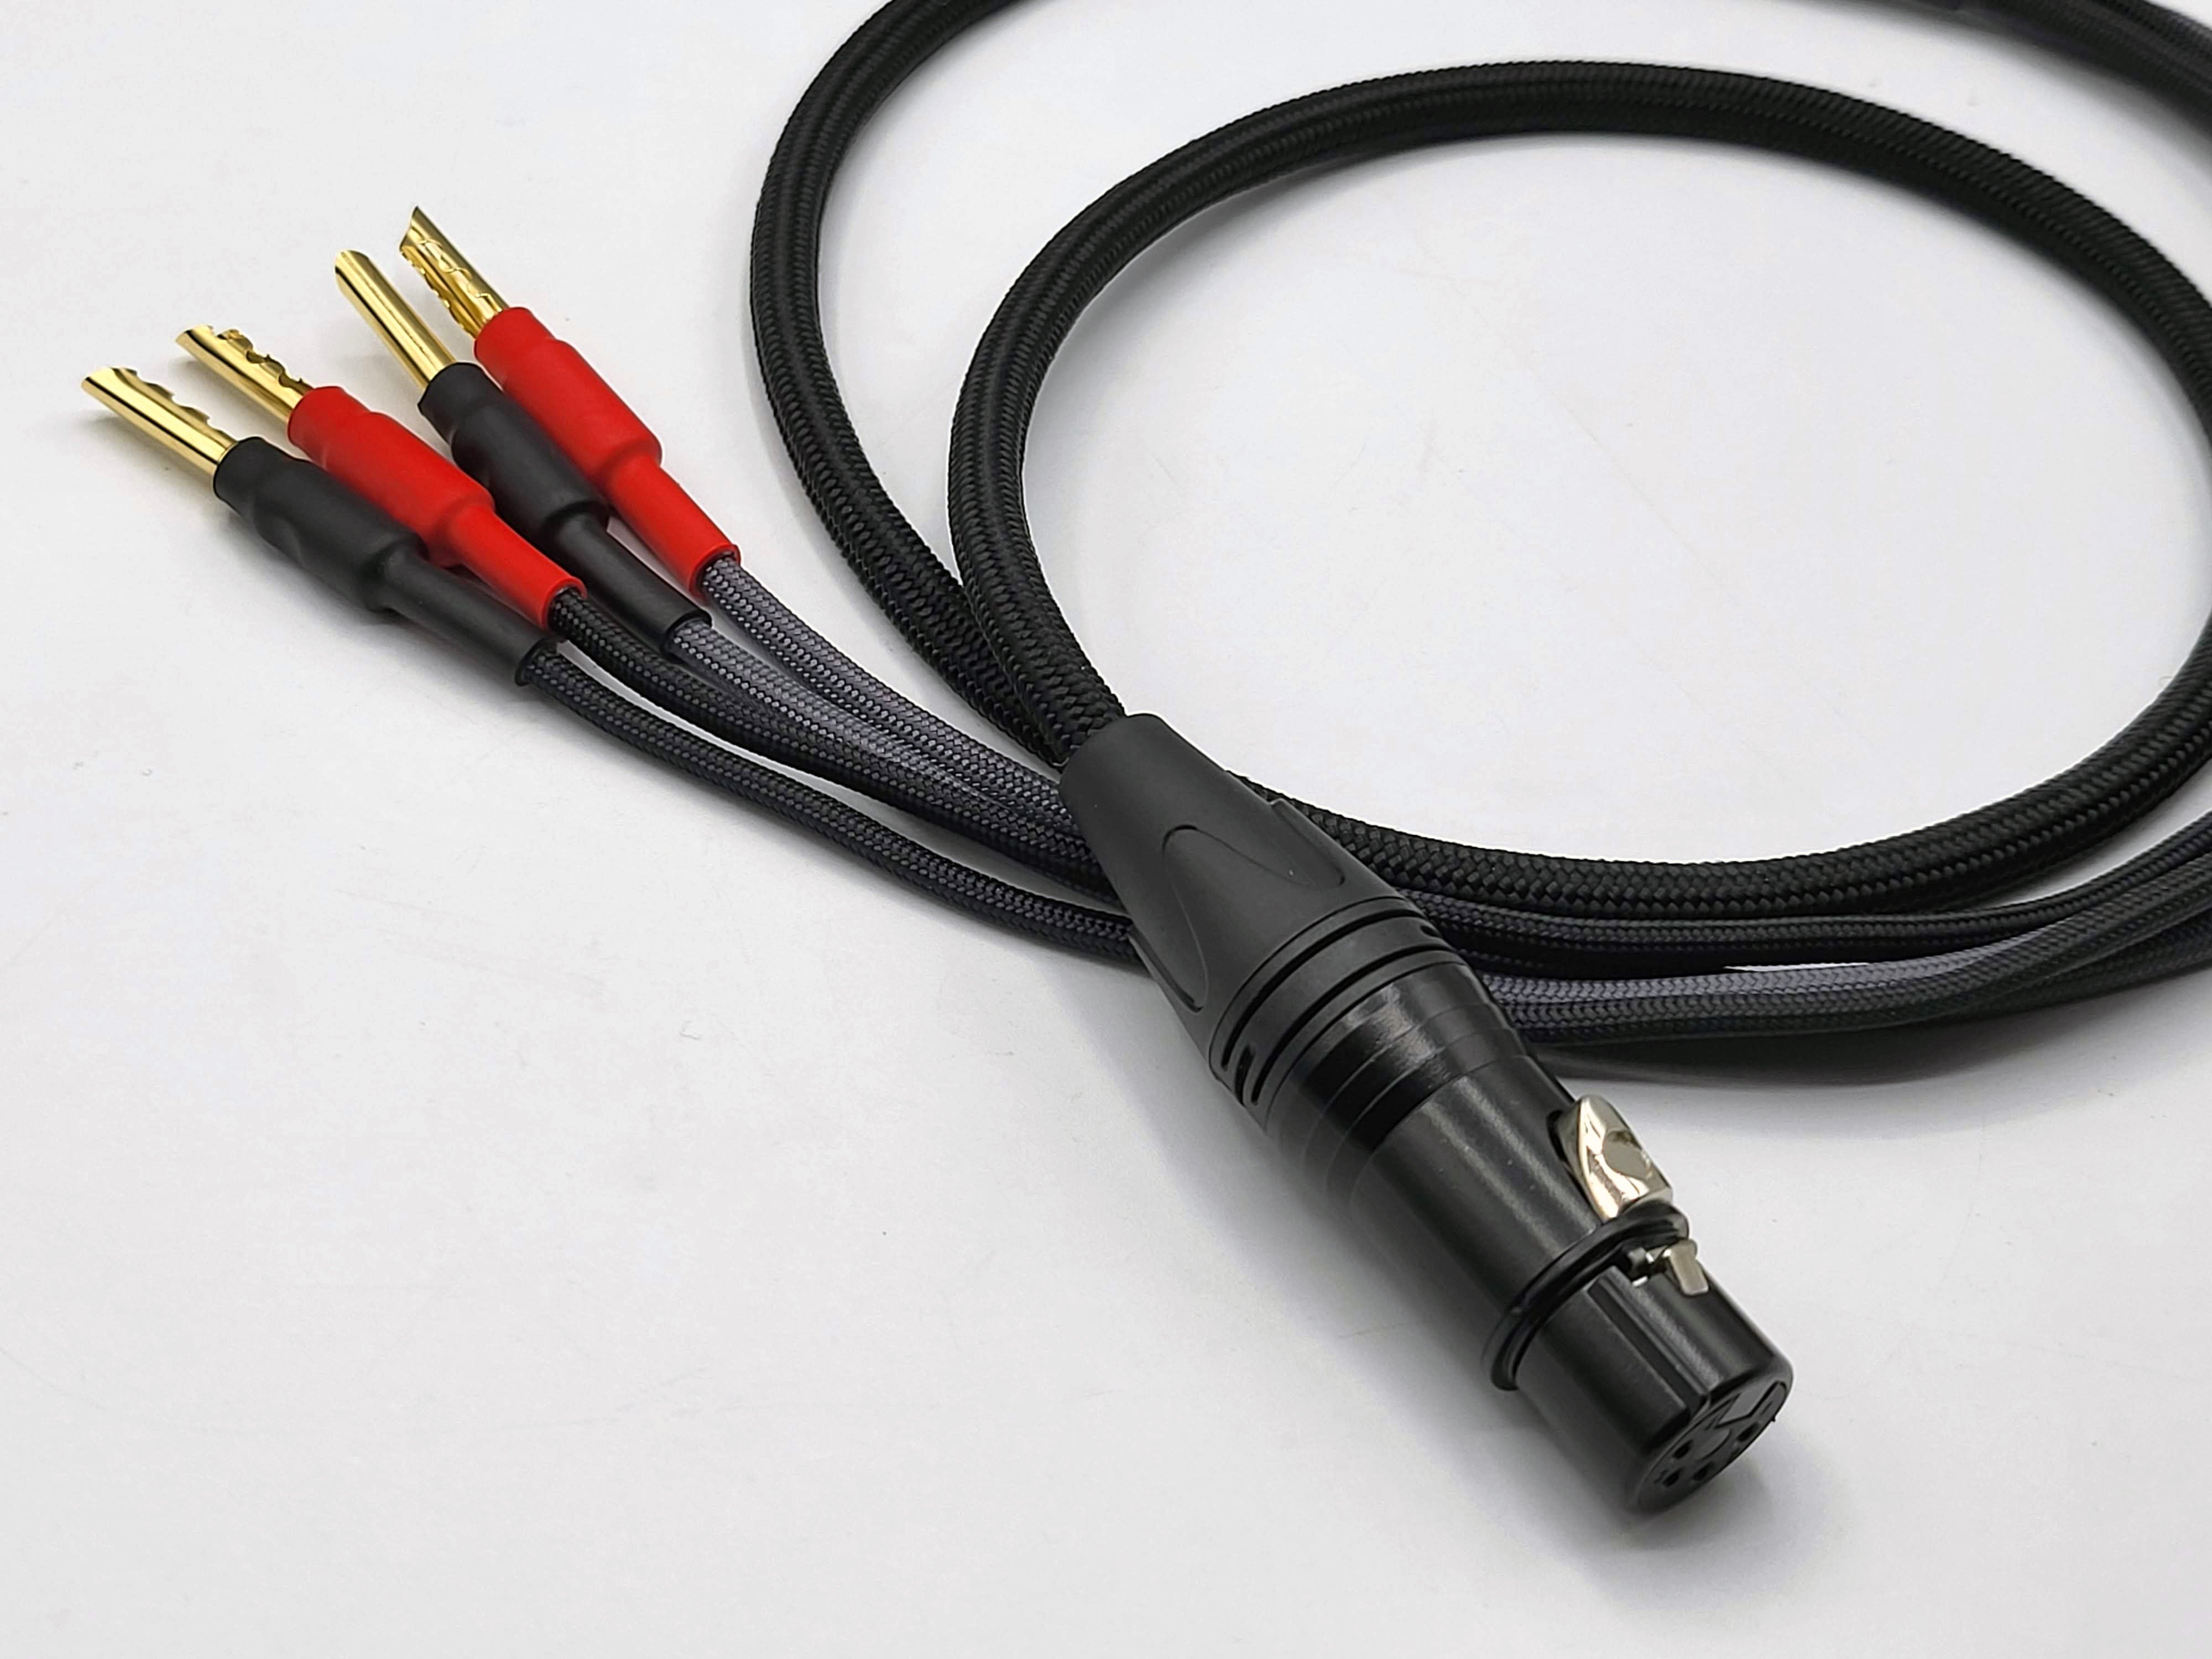 Headphone Adaptor Cable - Speaker Taps Banana Plugs to Female 4 Pin XLR